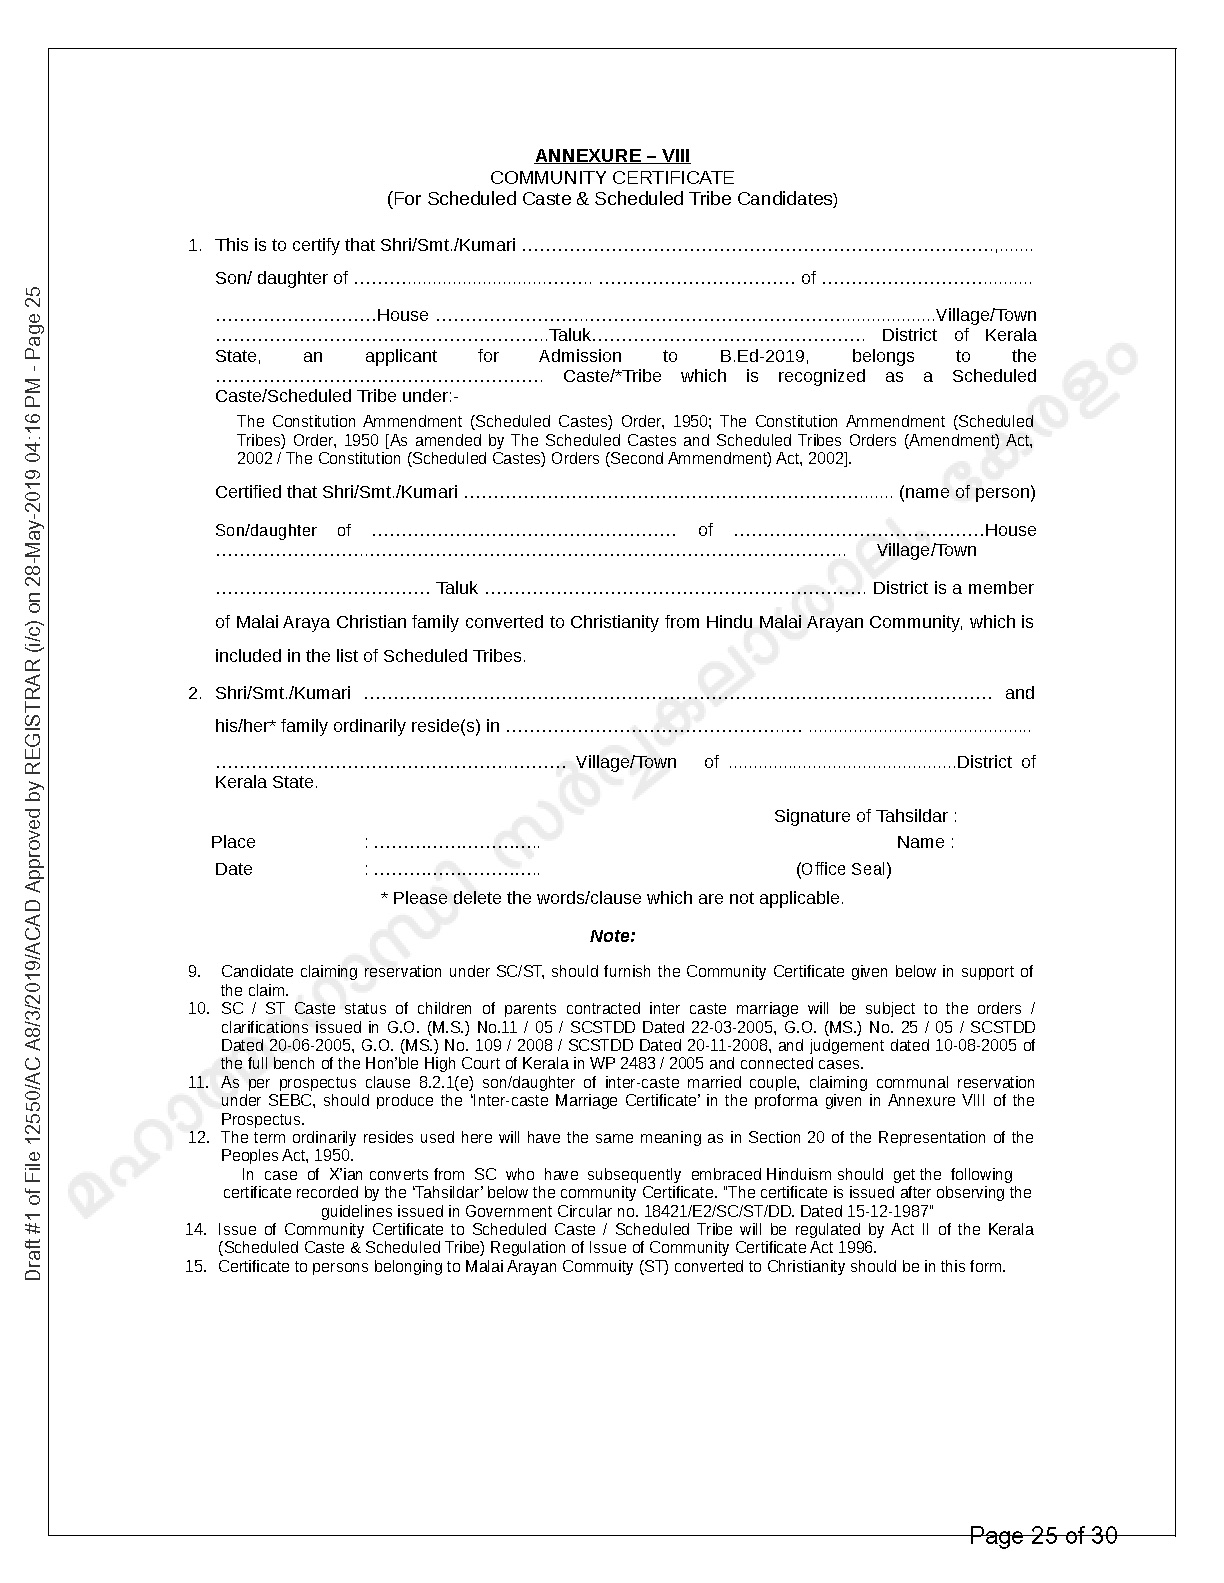 MG University B Ed Prospectus and Application form 2019 2020 - Notification Image 17